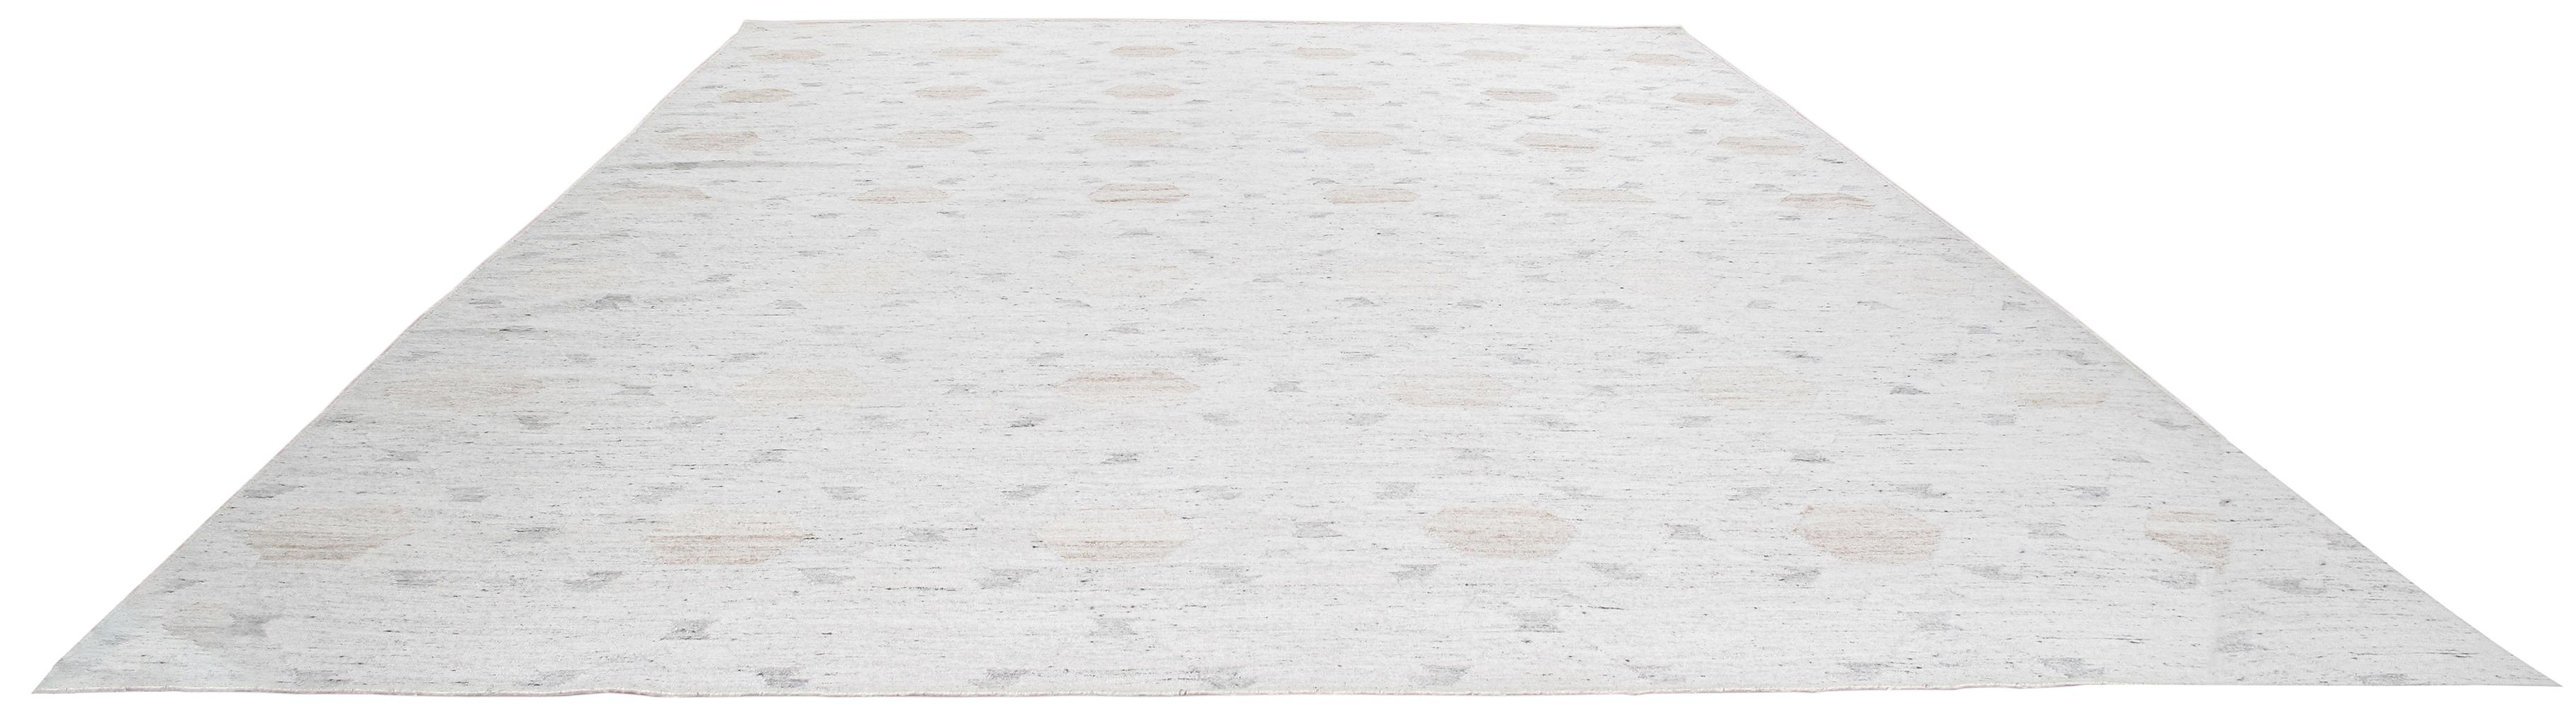 modern minimalist rug